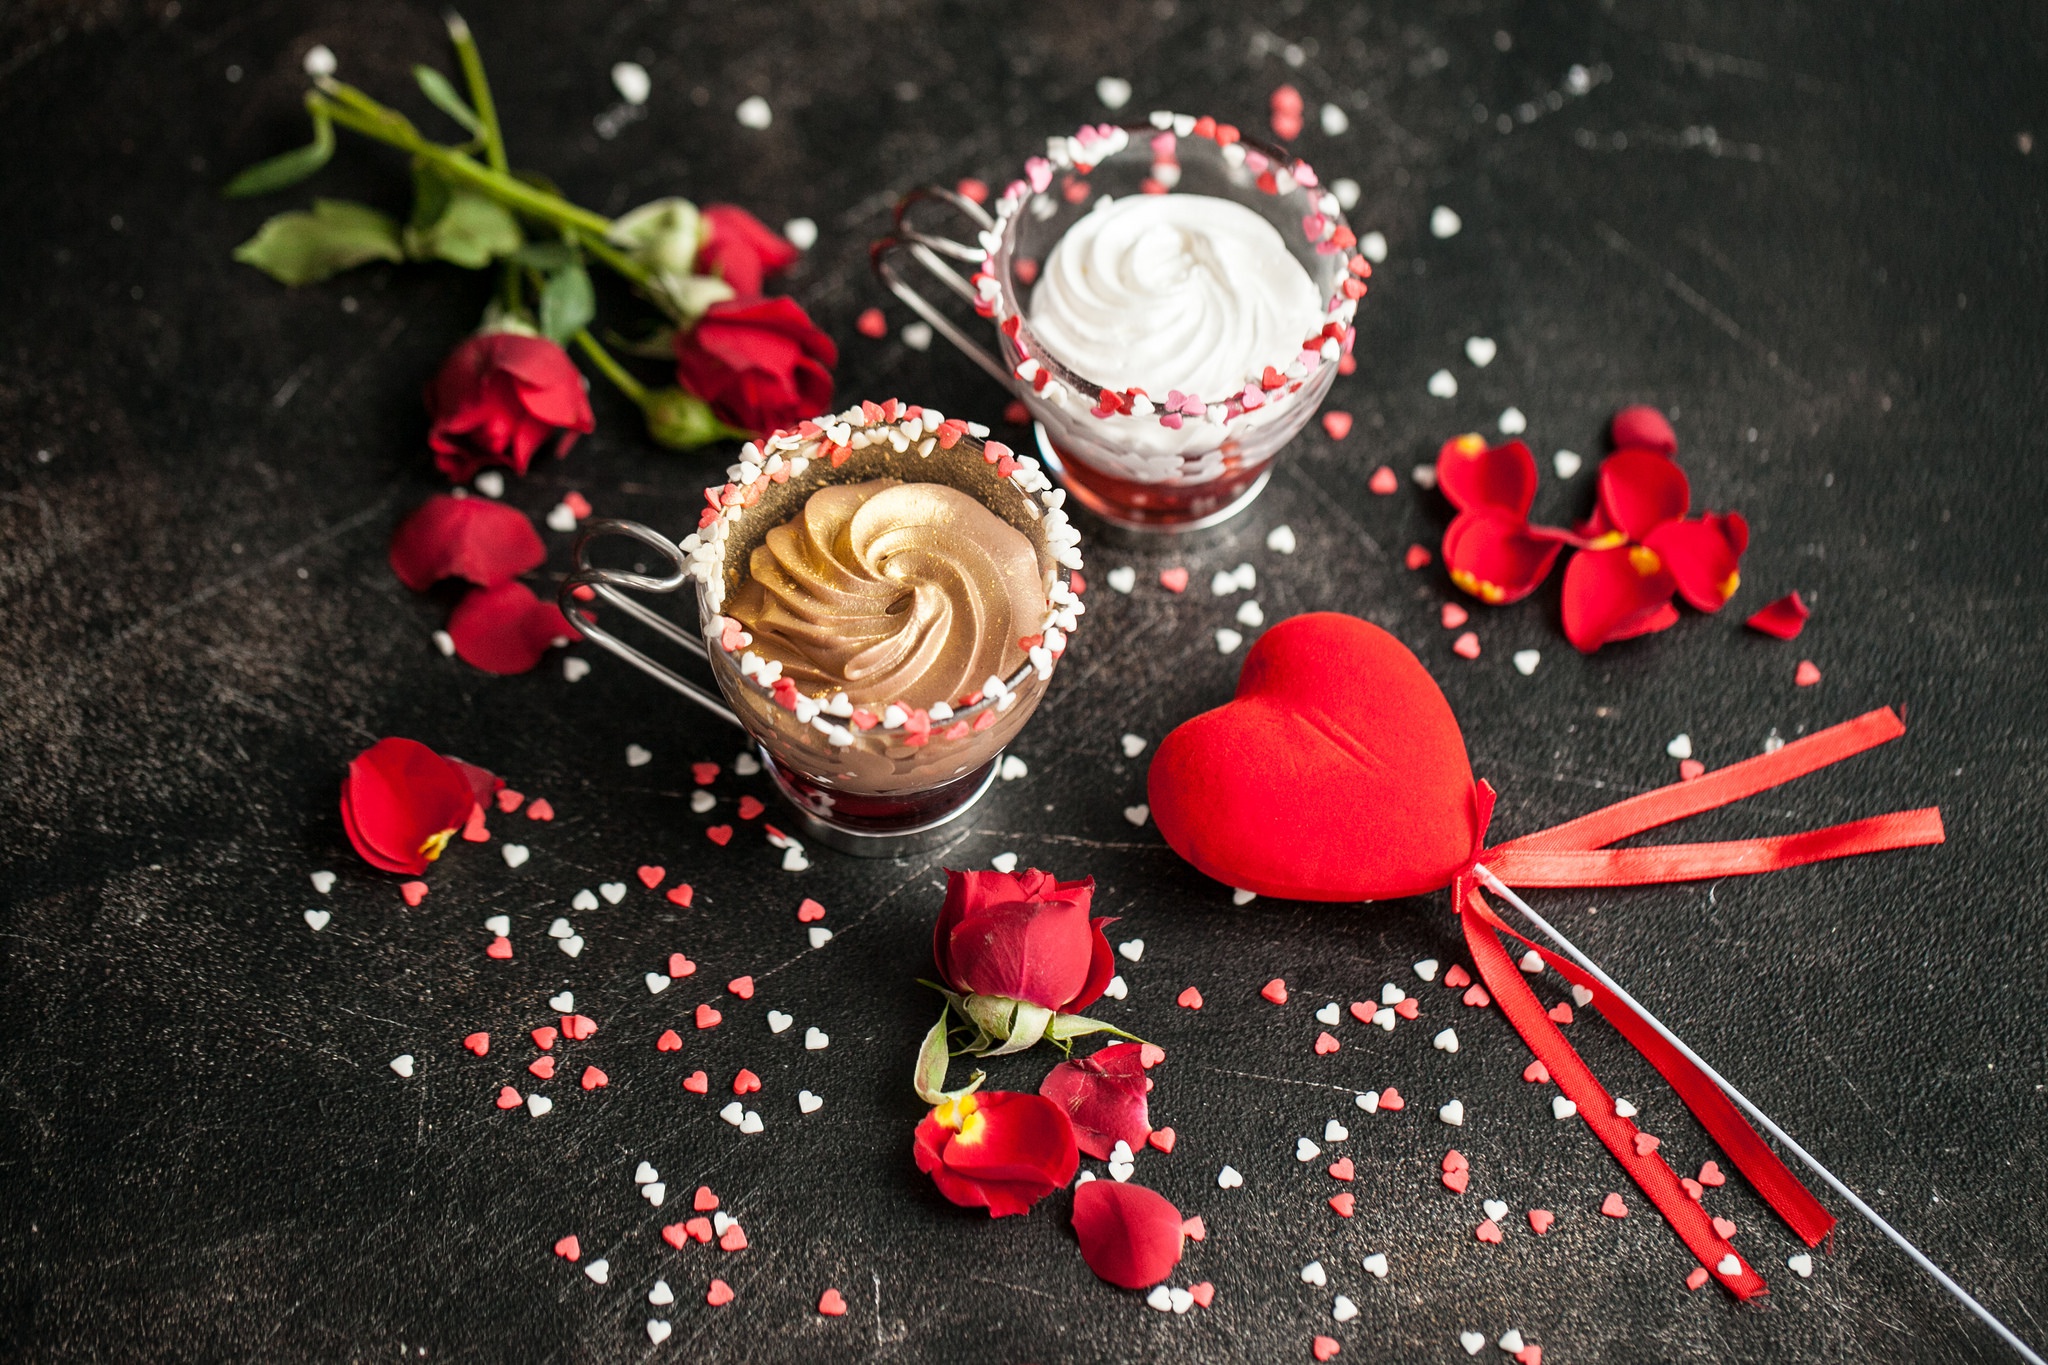 Download wallpaper Heart, Dessert, Valentine's day, The sweetness, sec...